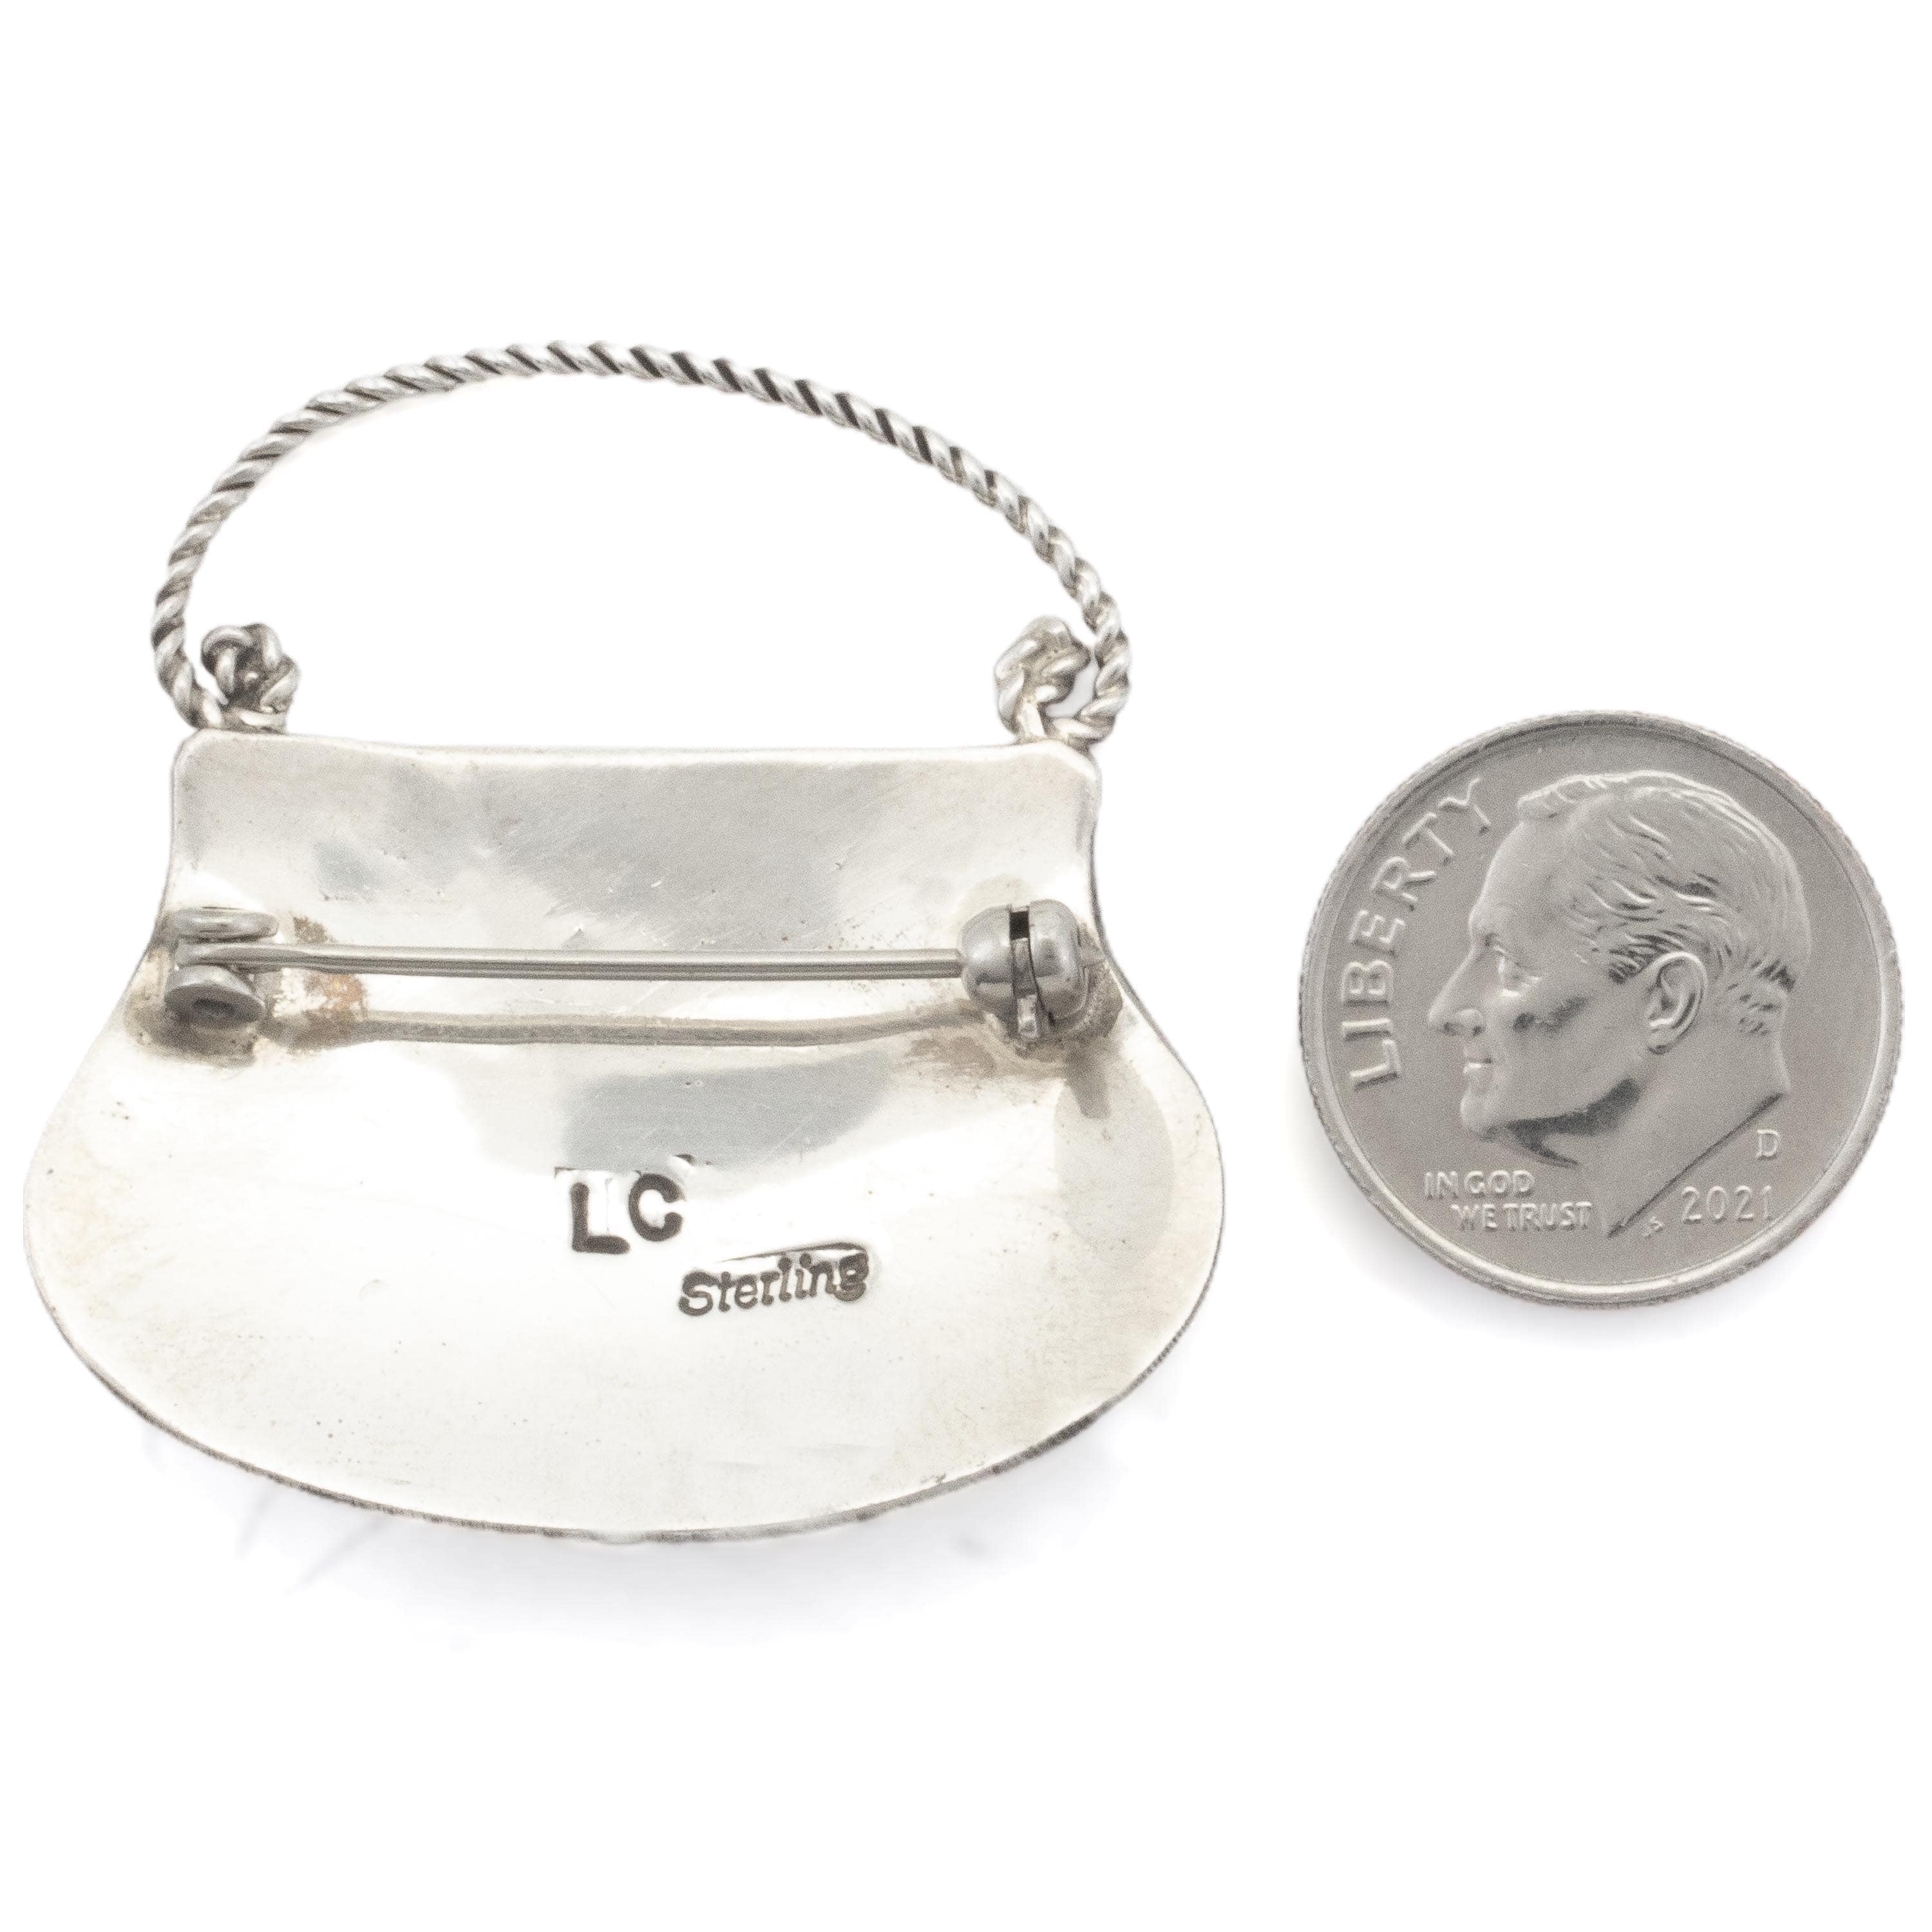 Kalifano Native American Jewelry Lee Charley Navajo Coral USA Native American Made 925 Sterling Silver Purse Pin NAP700.001